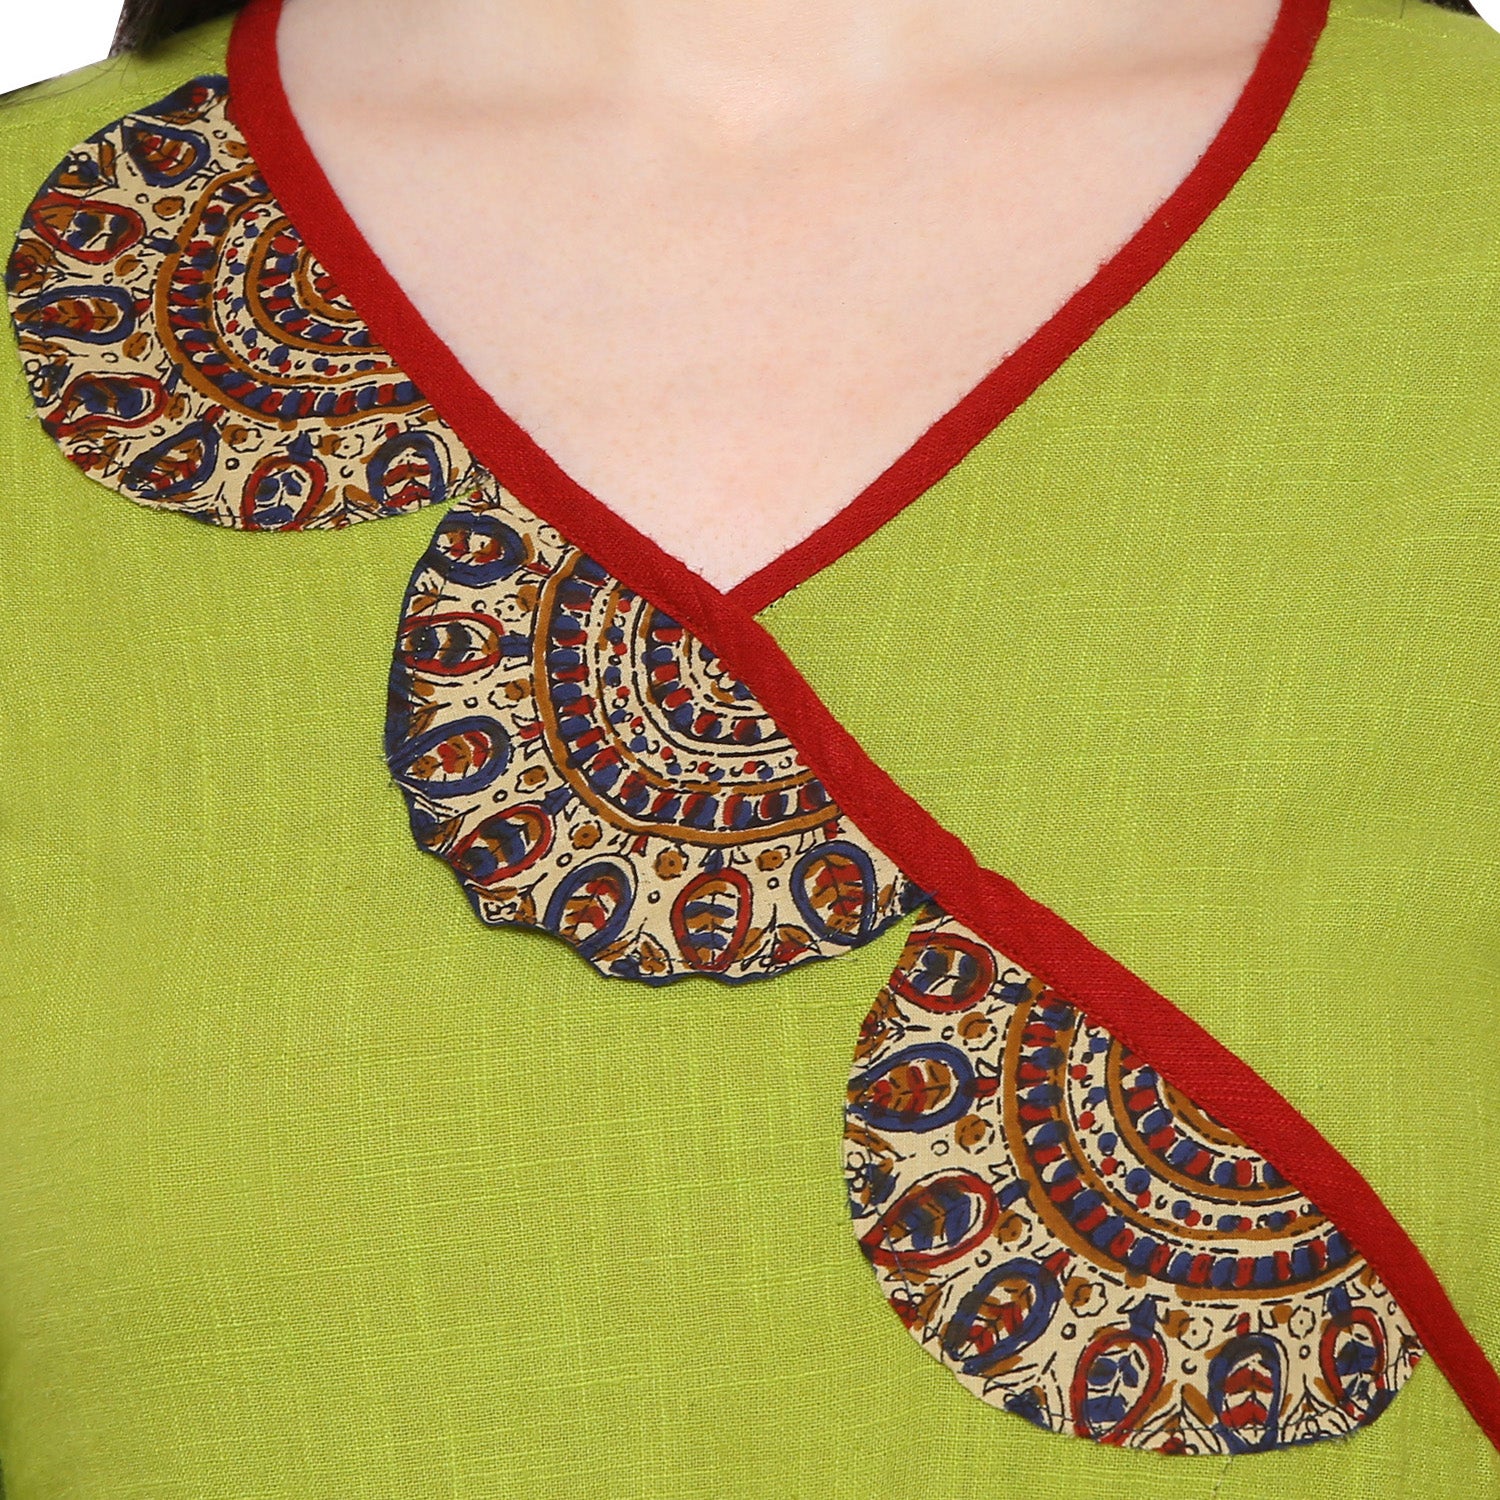  Embellished Anarkali Kurta (Green)